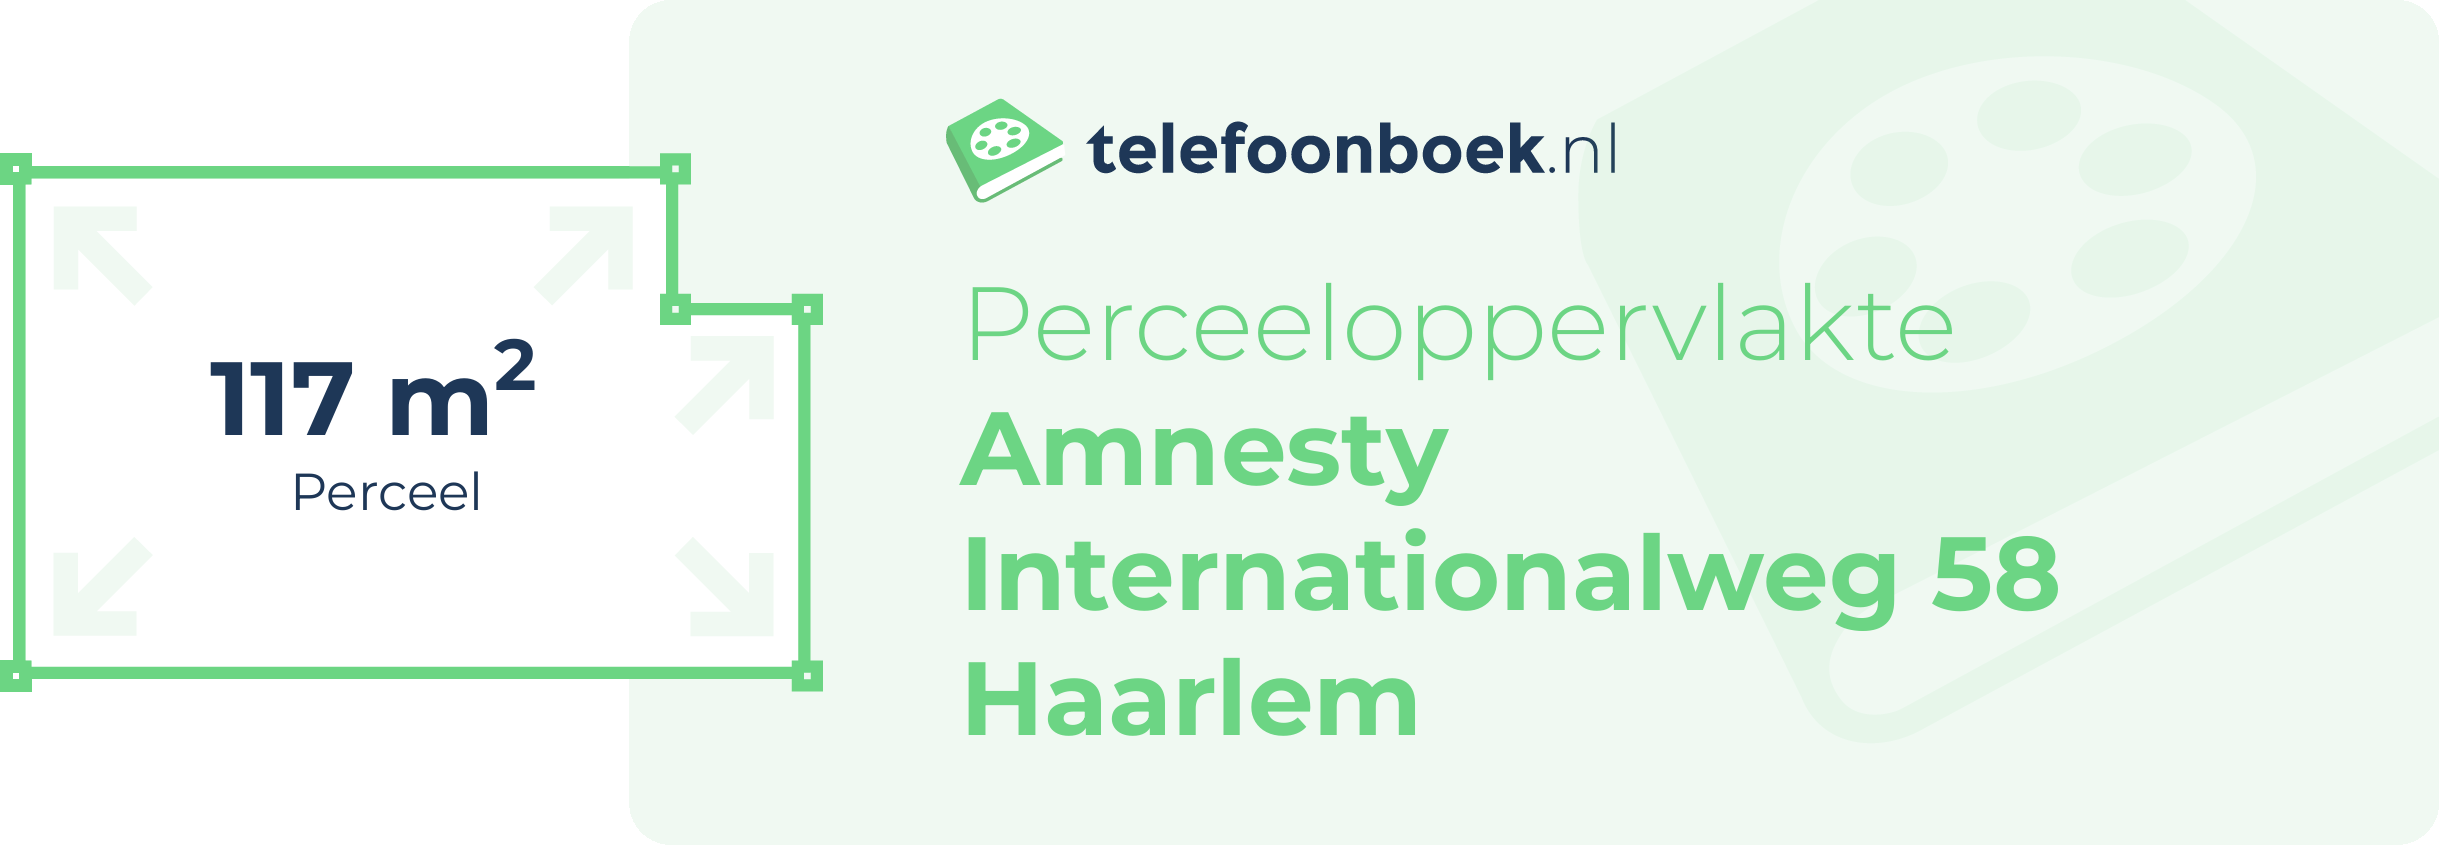 Perceeloppervlakte Amnesty Internationalweg 58 Haarlem